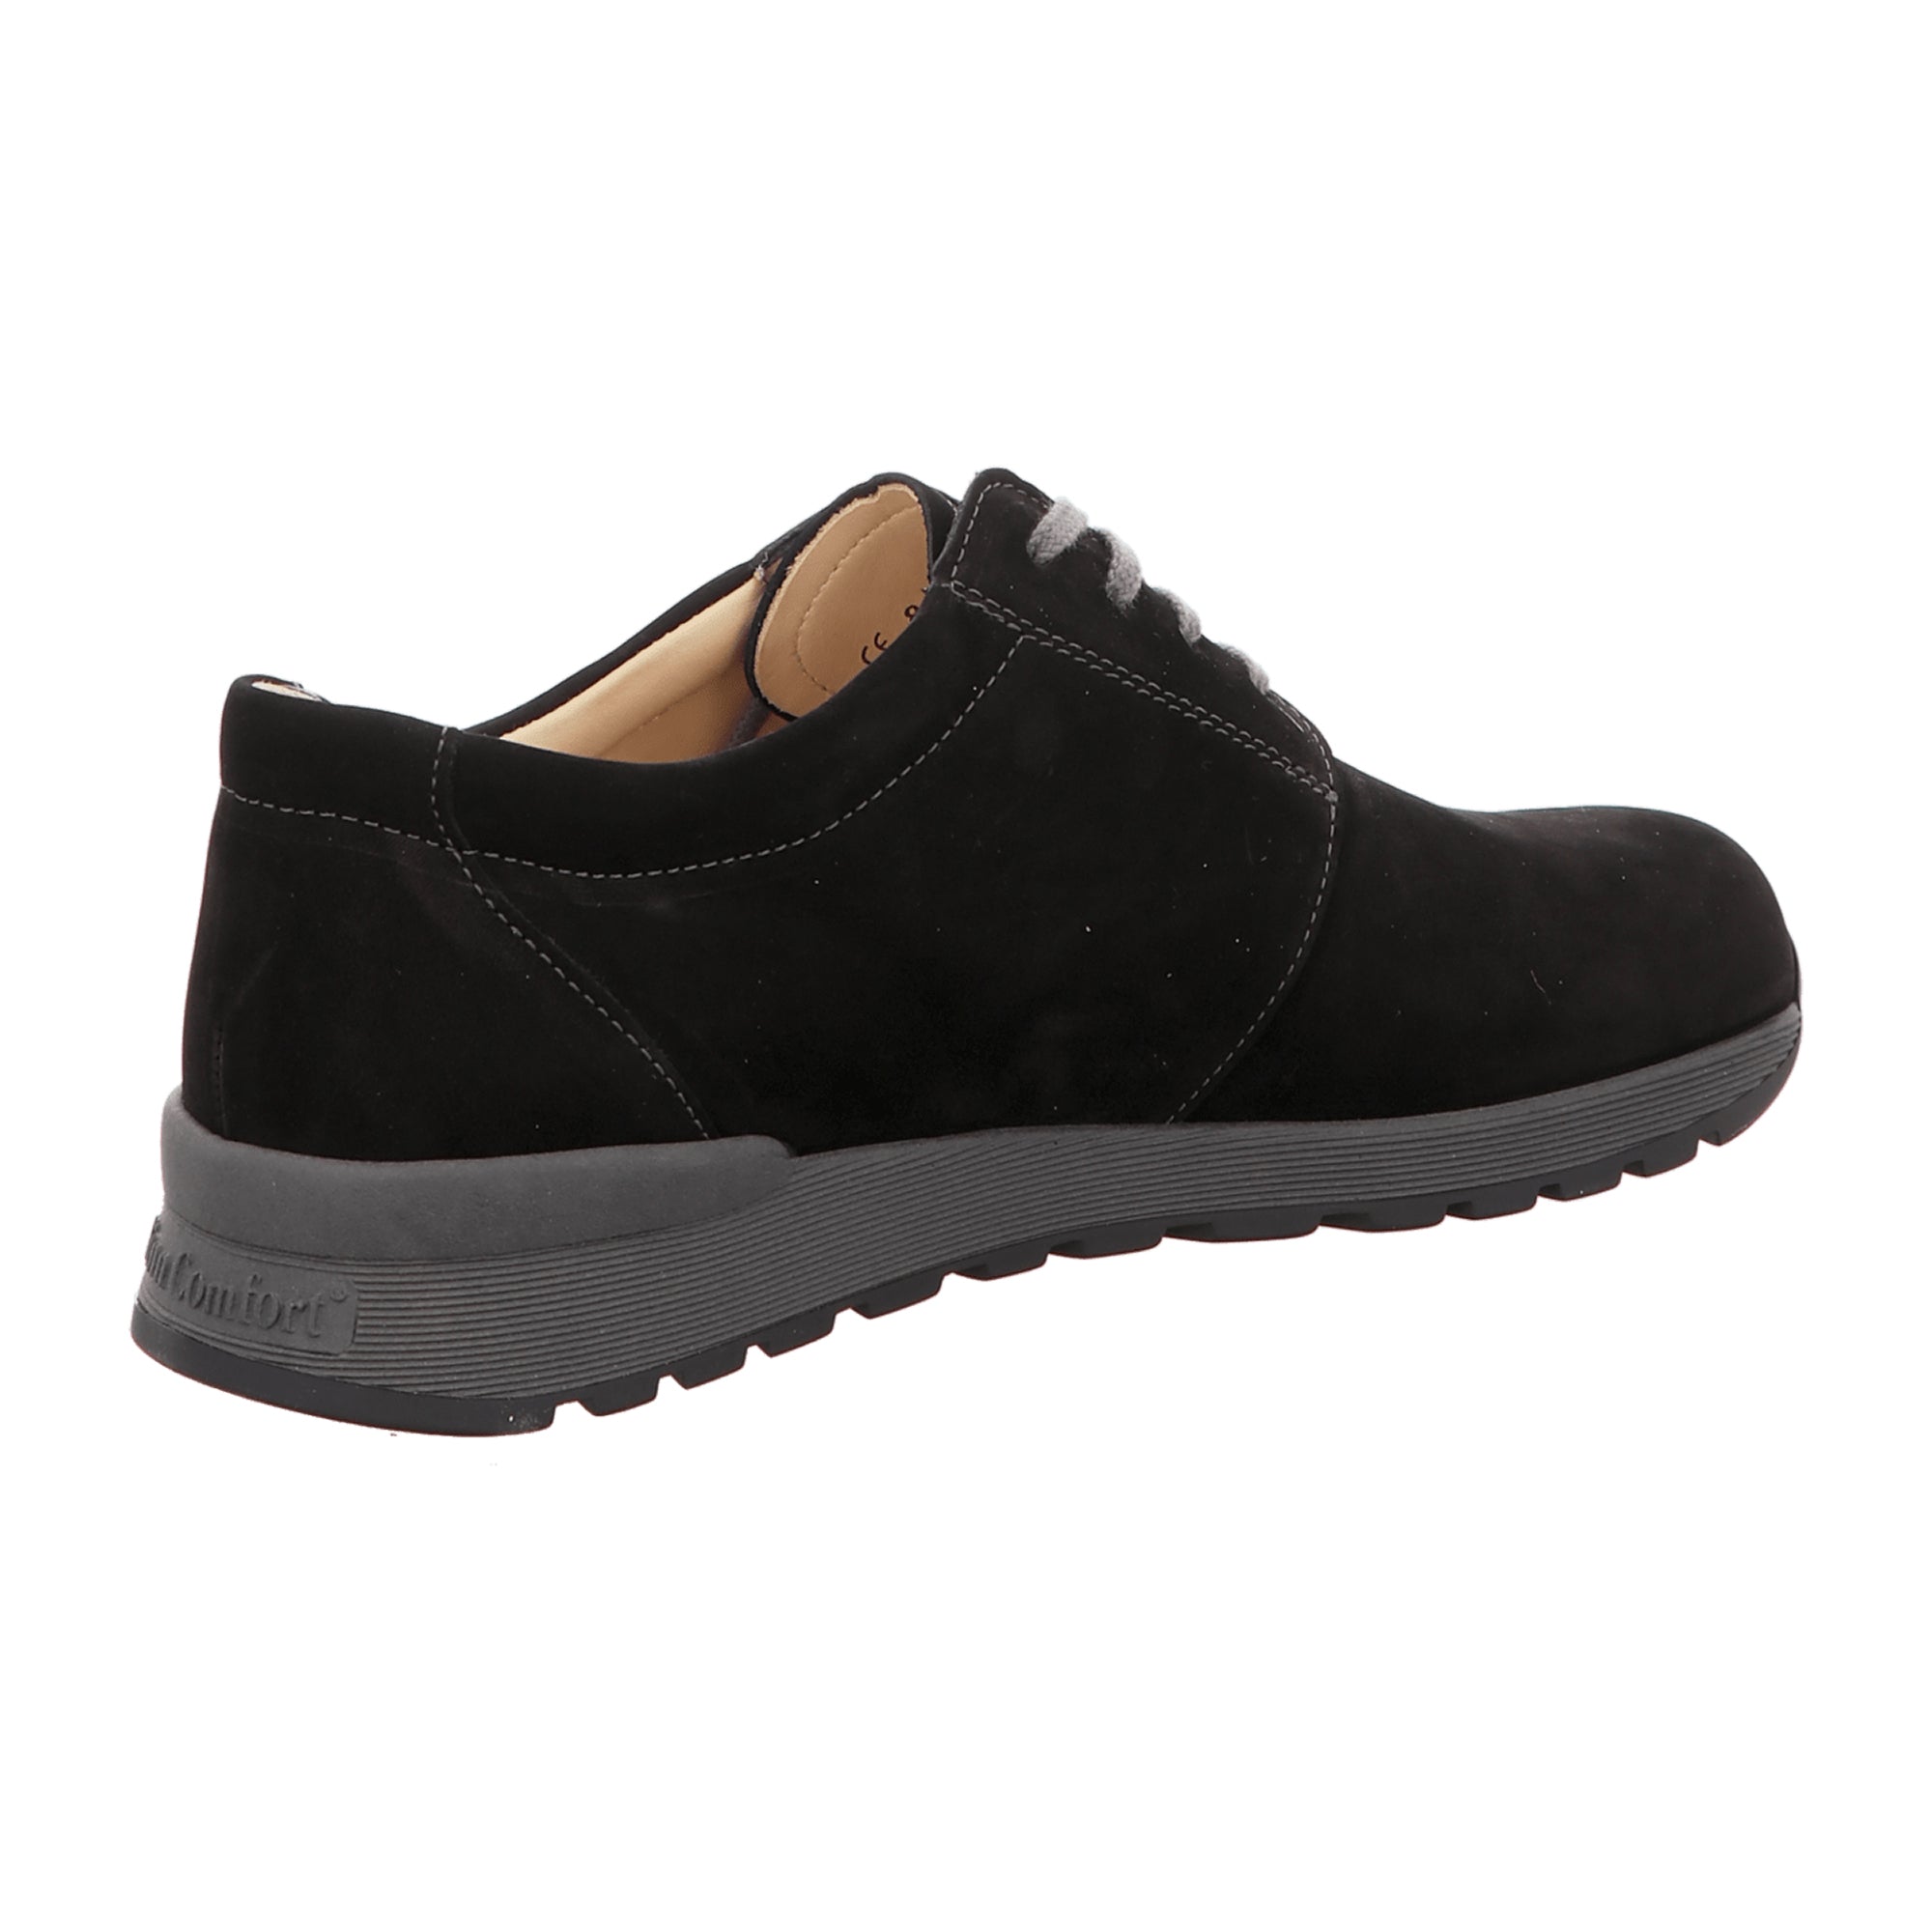 Finn Comfort Enfield Men's Black Comfort Shoes - Stylish & Durable